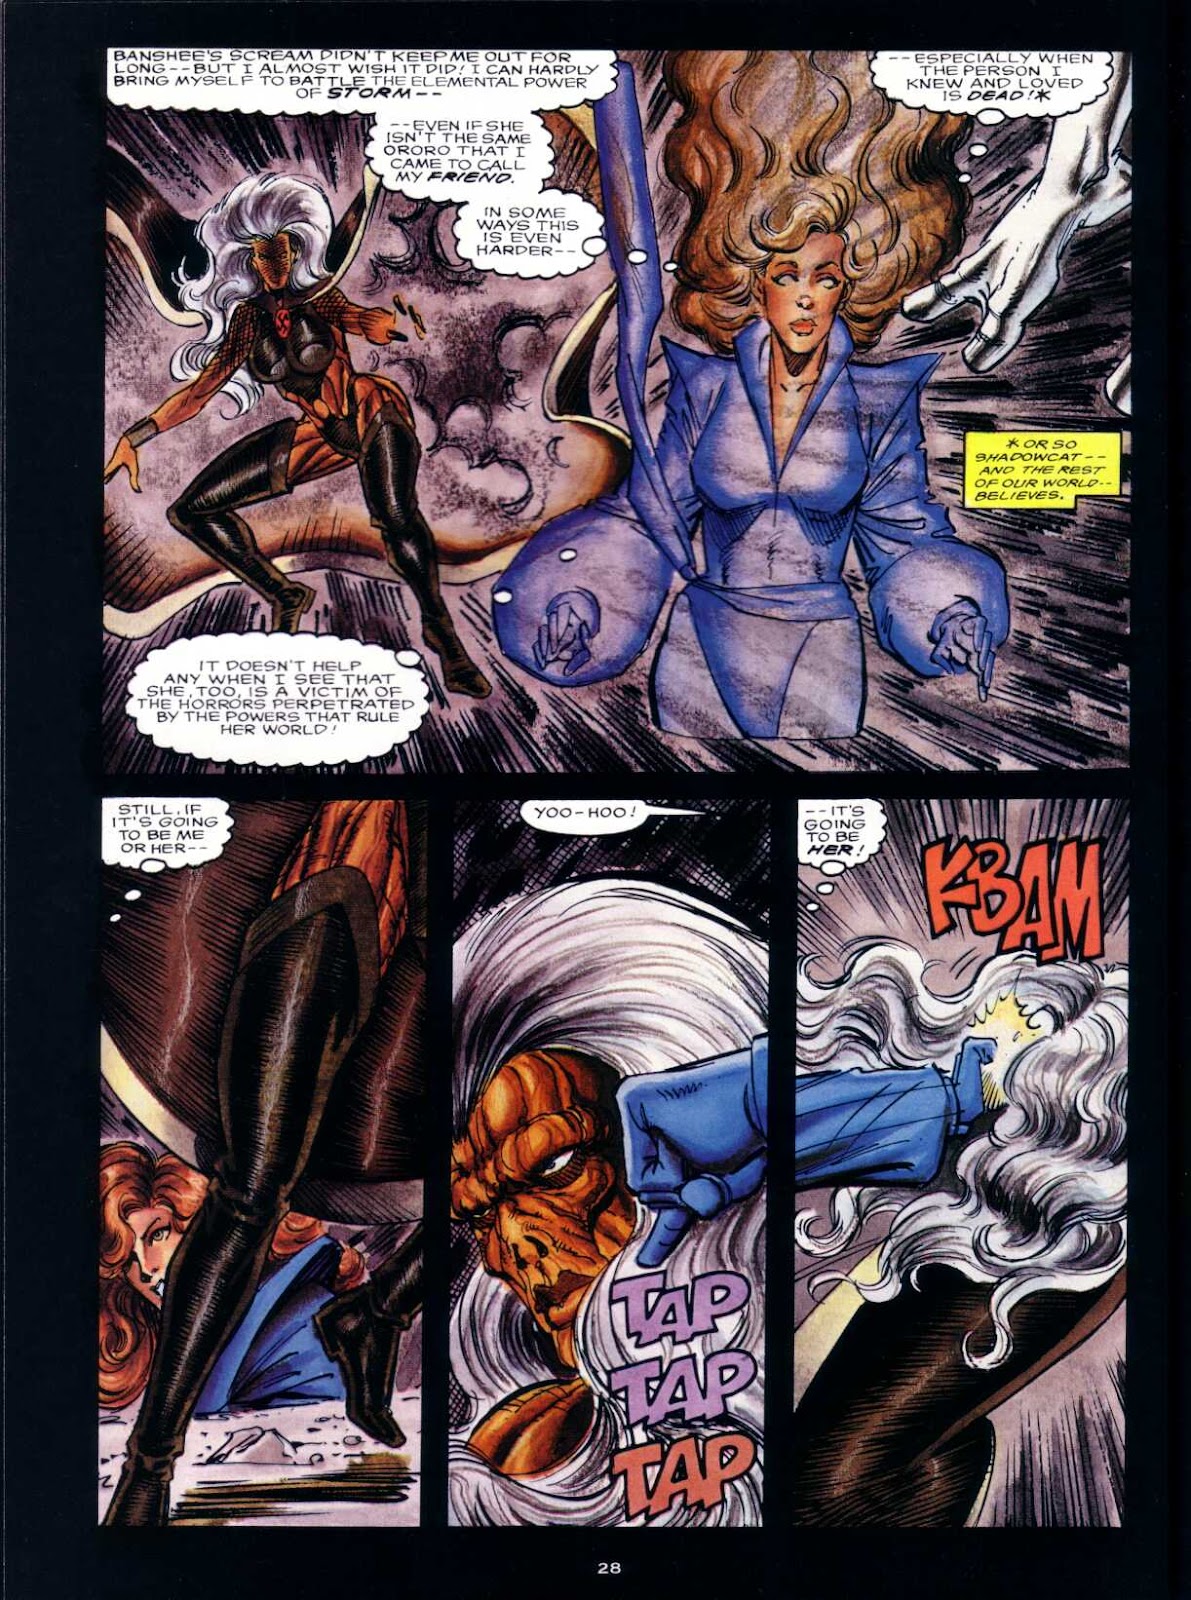 Marvel Graphic Novel issue 66 - Excalibur - Weird War III - Page 27